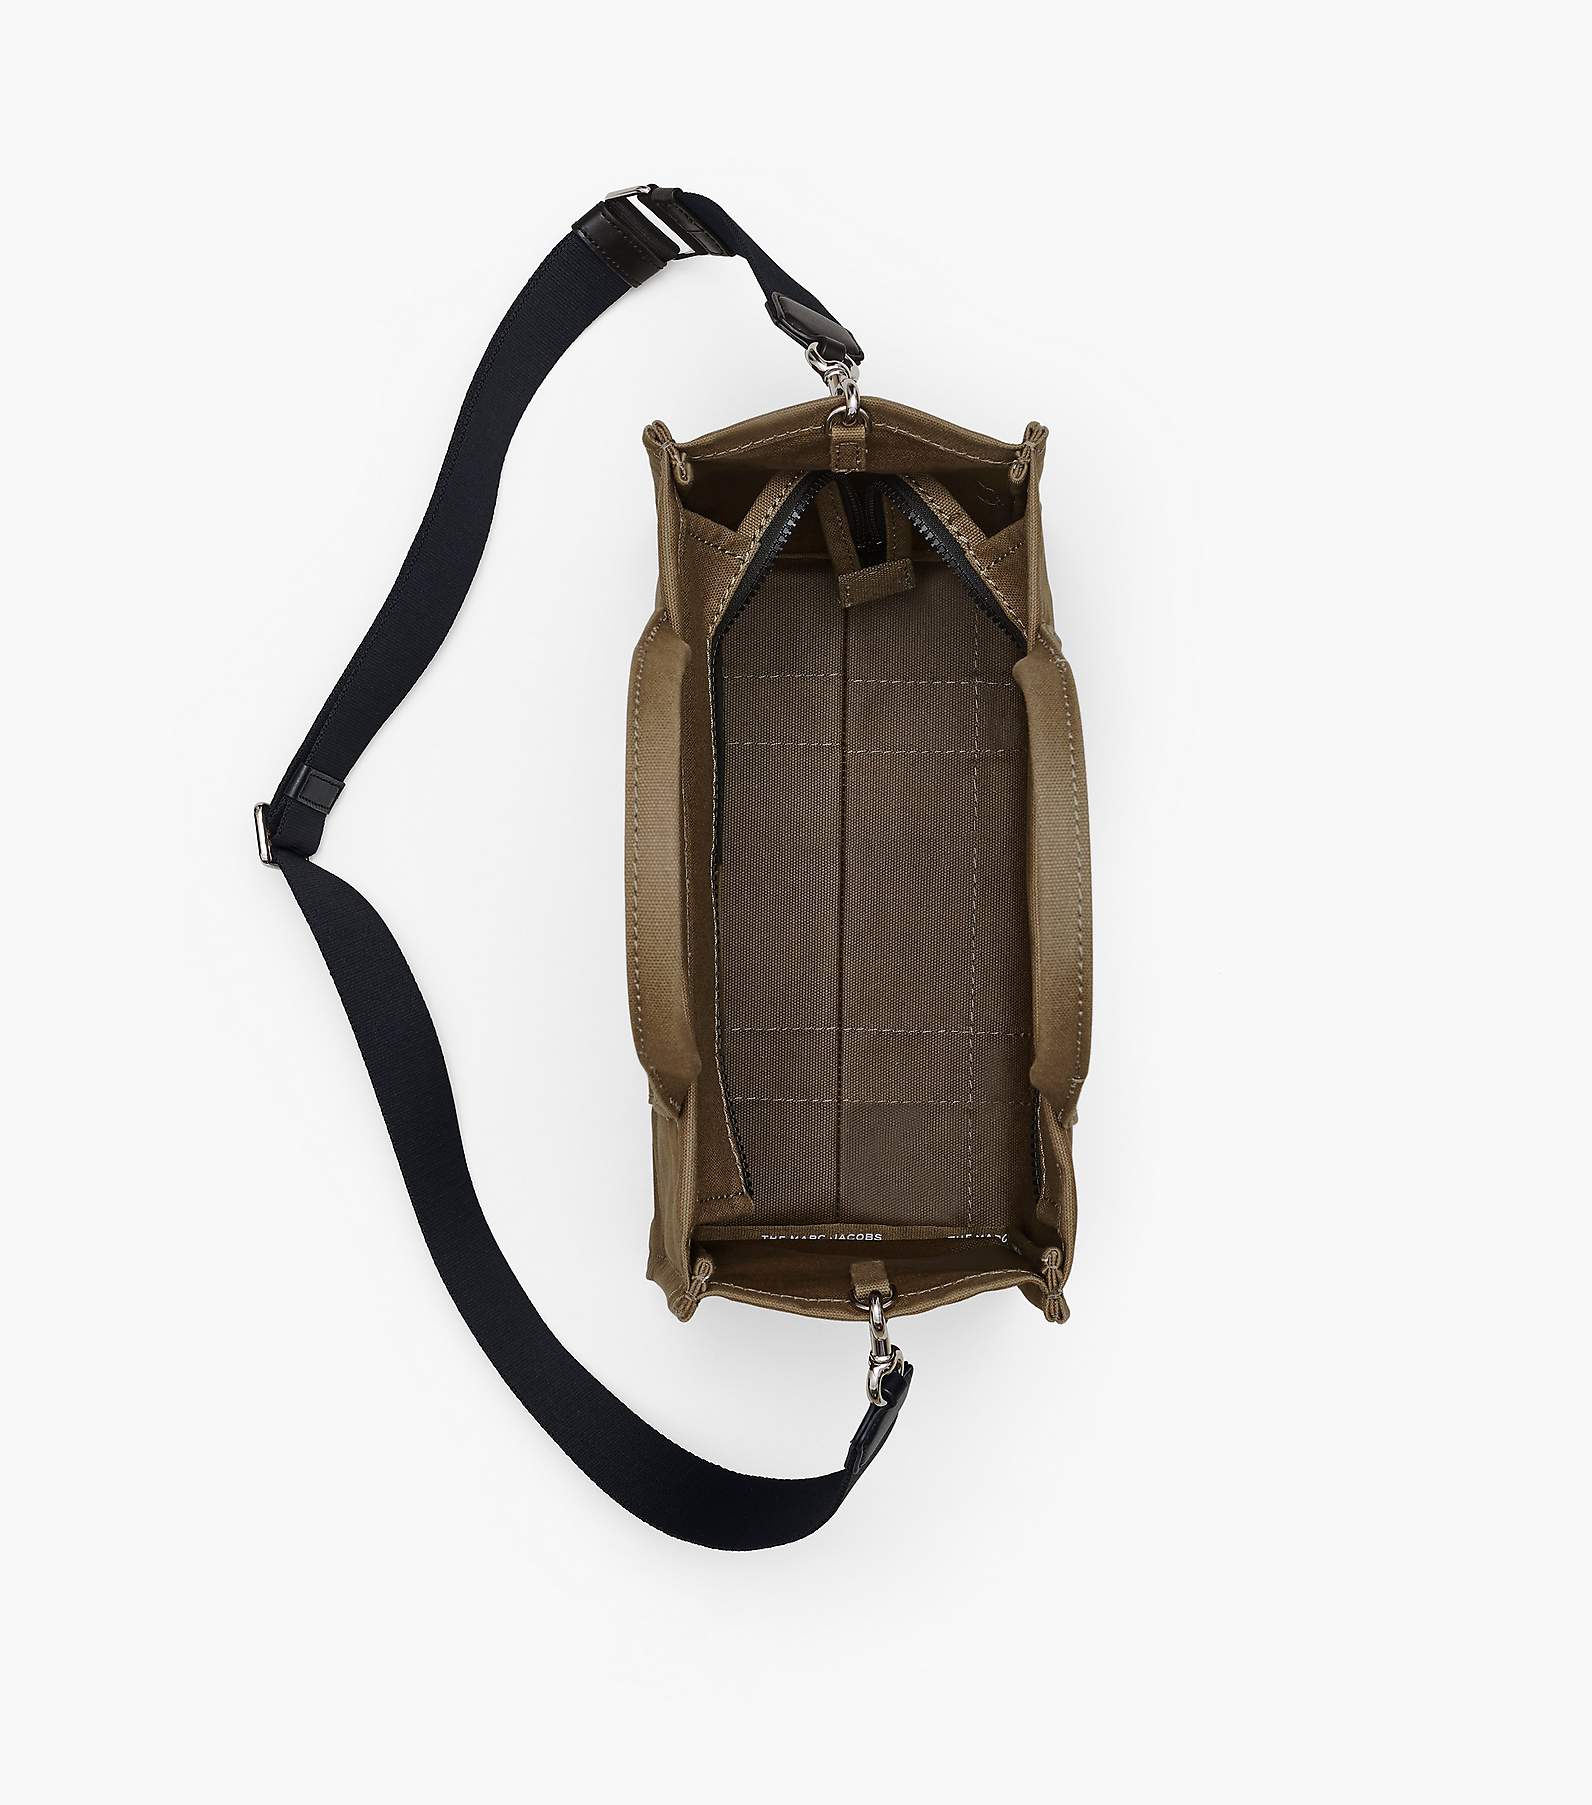 Totes bags Marc Jacobs - The medium tote bag - H004L01PF21841